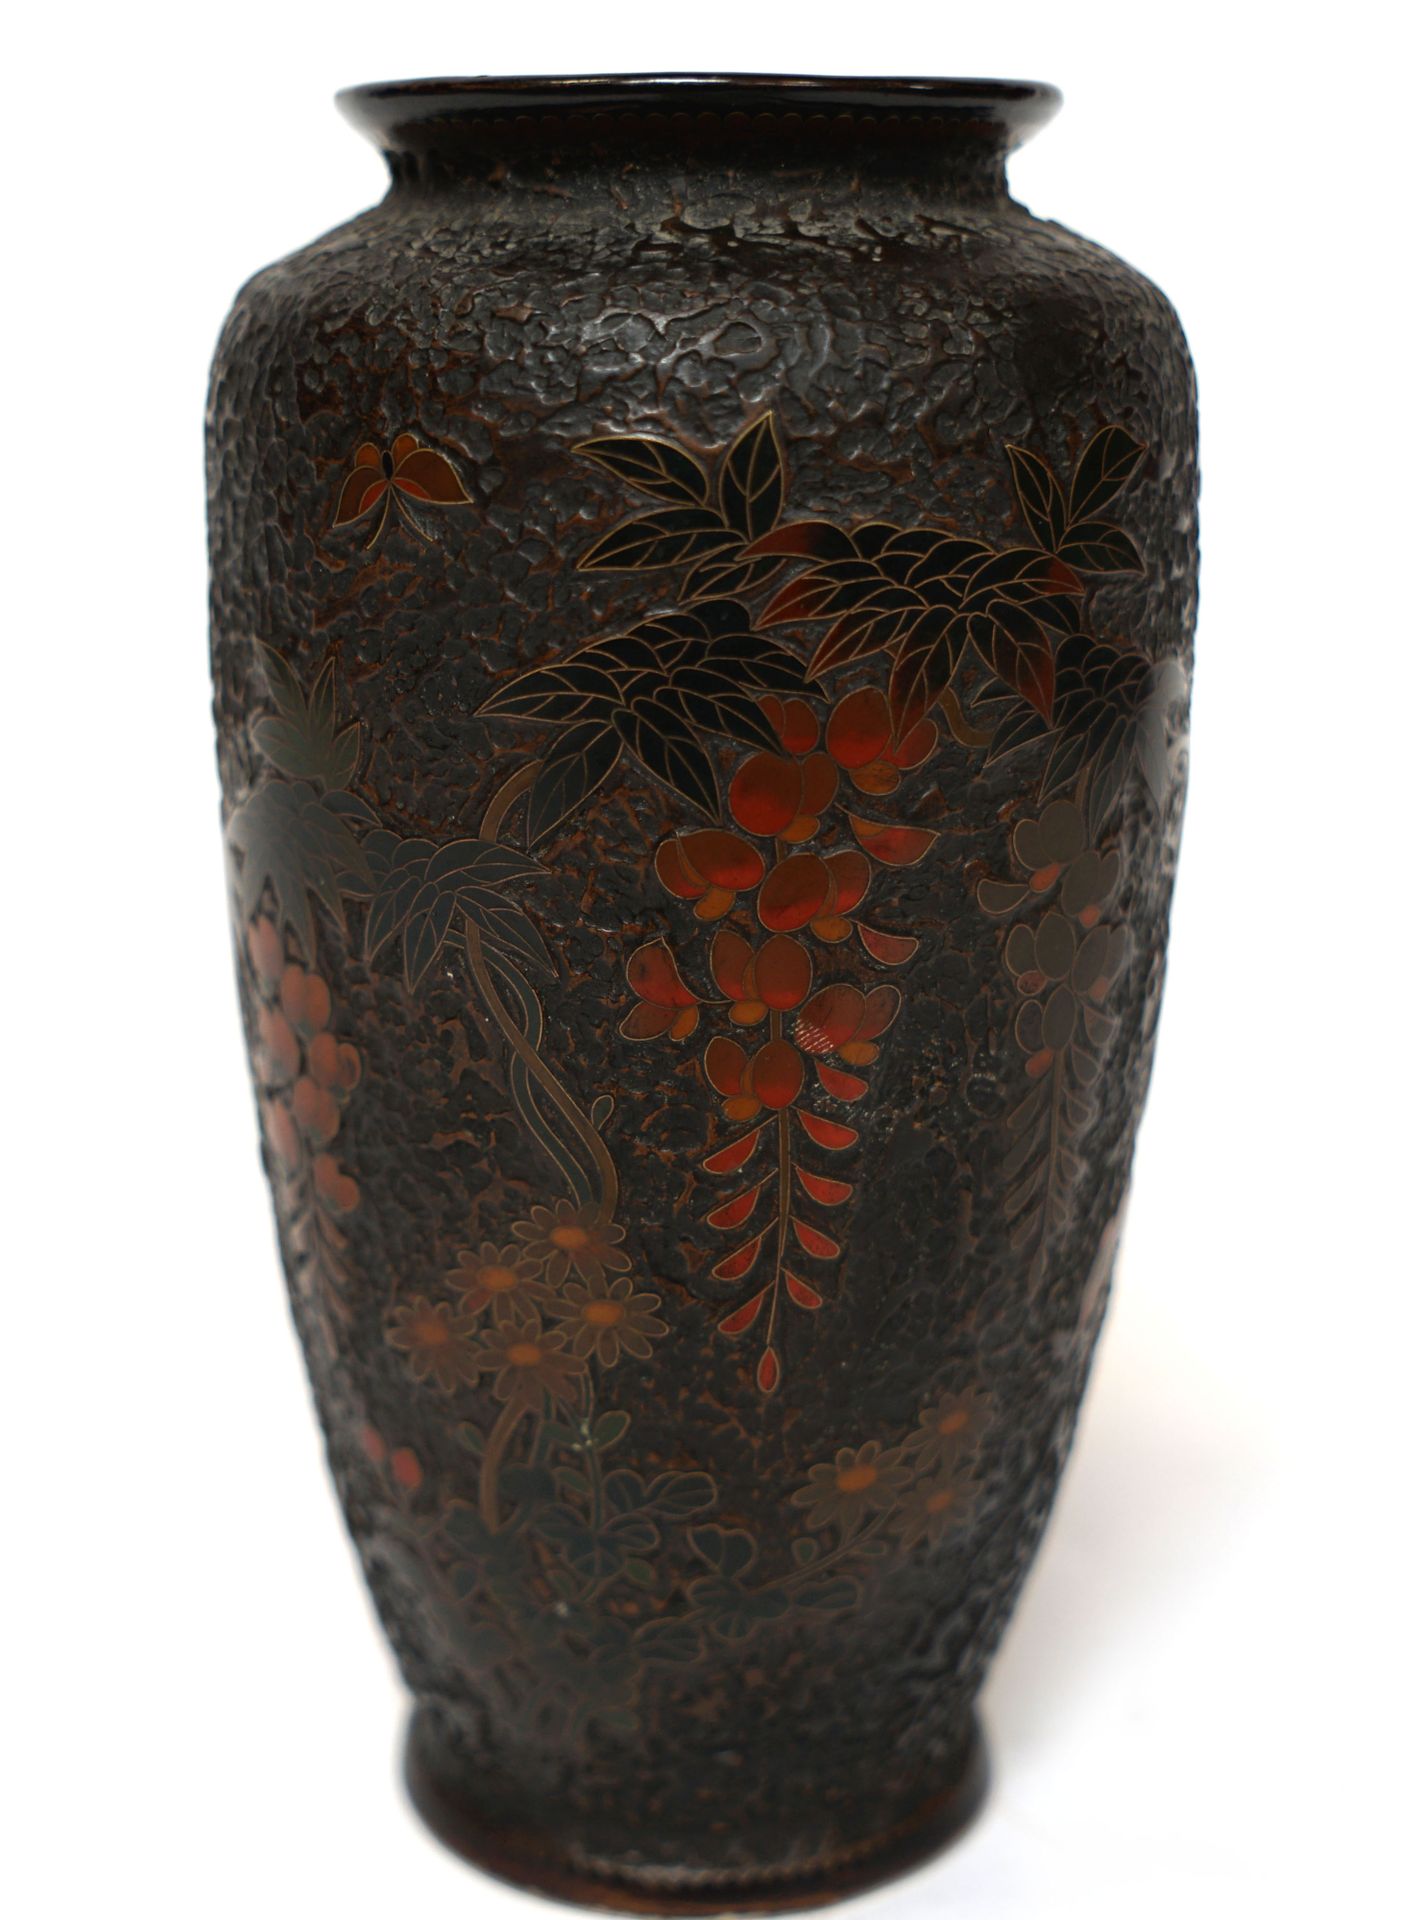 Null 日本。瓷器花瓶，在巧克力浮雕背景上用金属景泰蓝装饰着紫藤和蝴蝶（非常轻微的缺口）。底座下有一个标记。H. 19厘米。